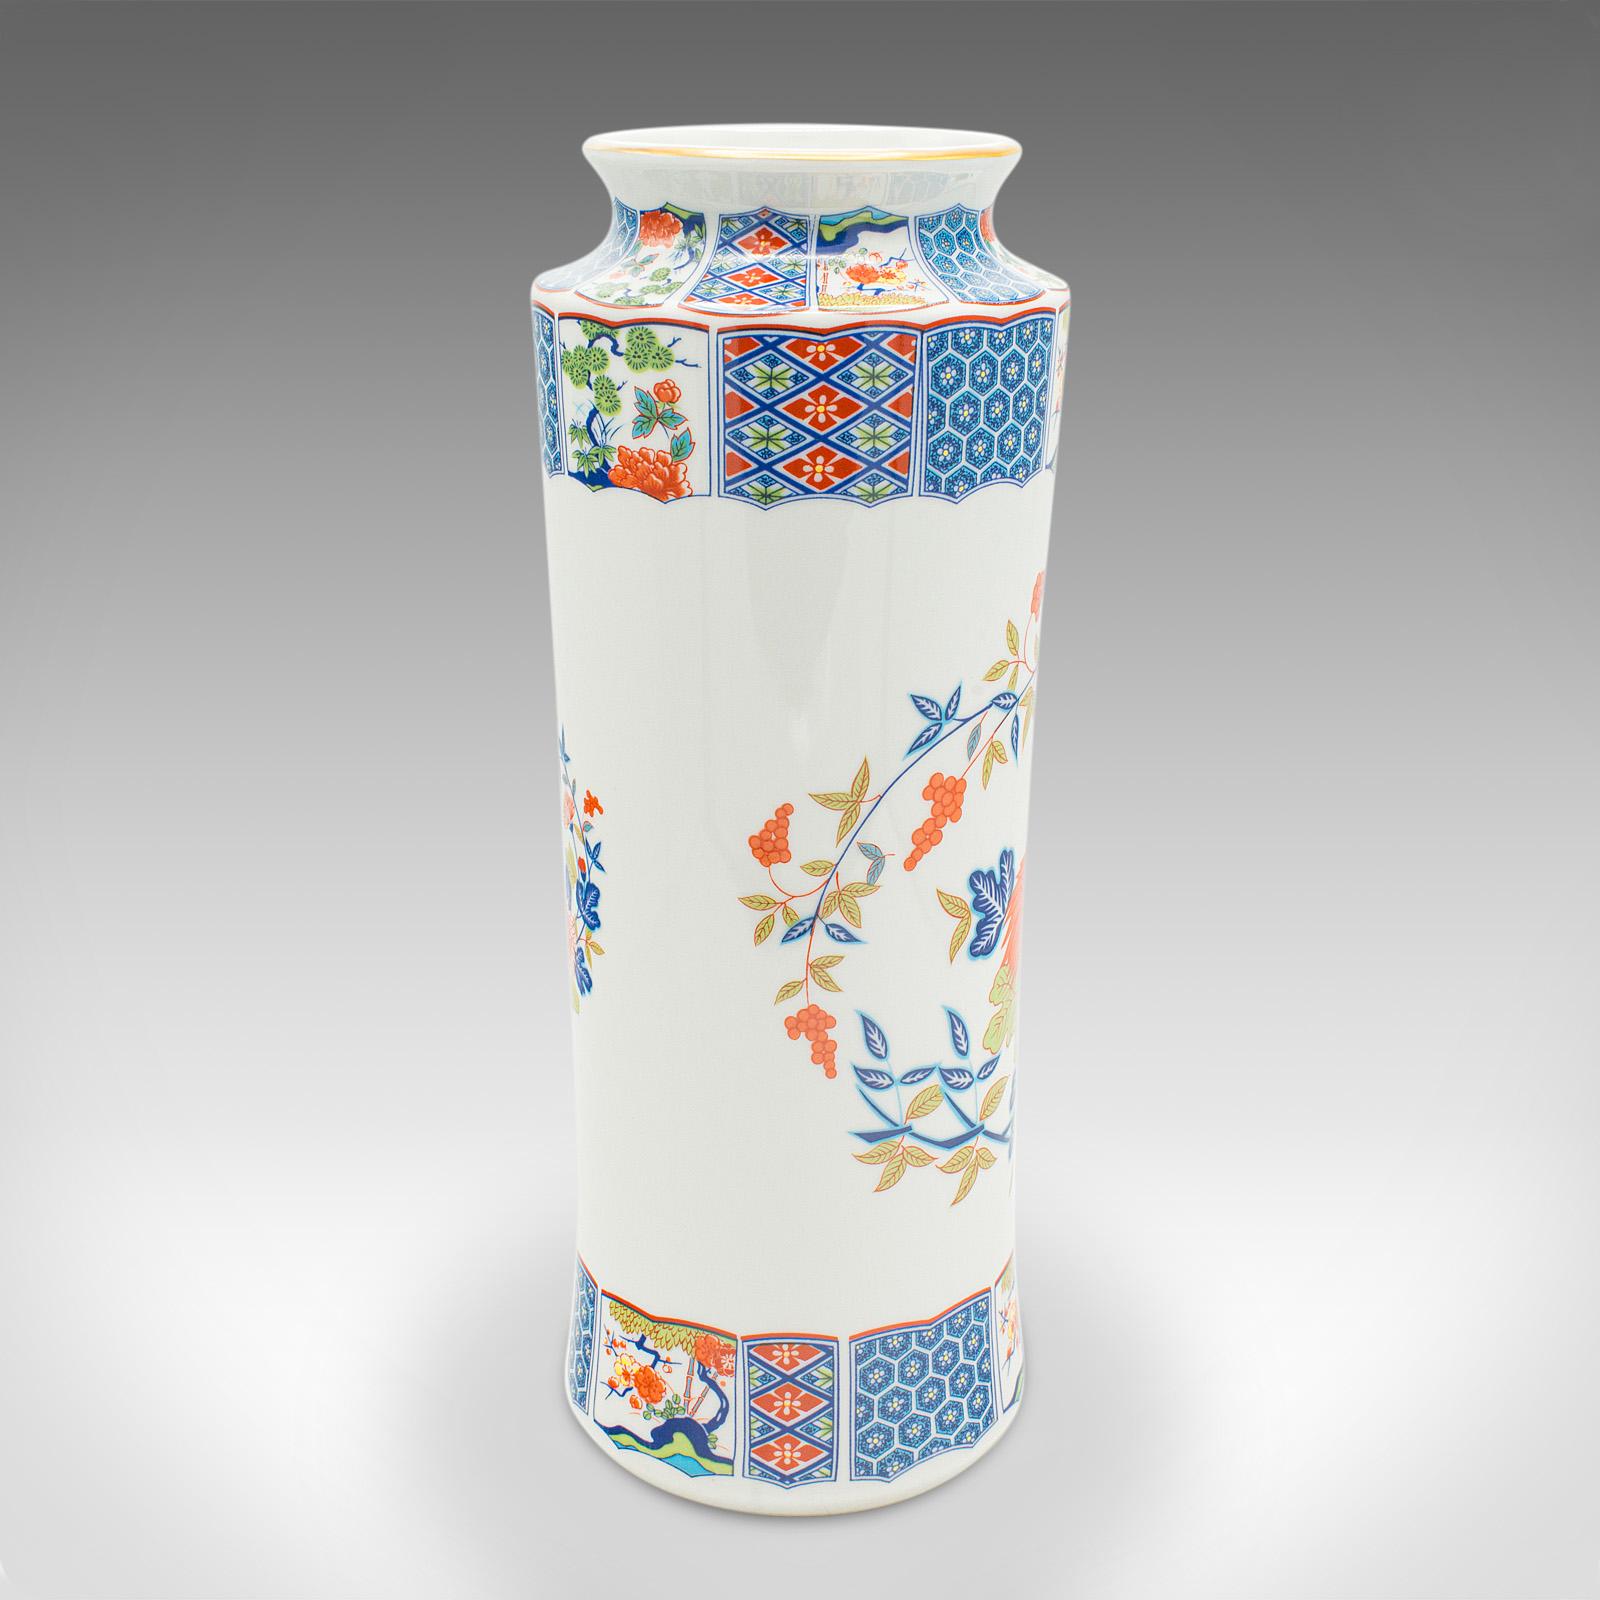 Chinese Export Vintage Decorative Stem Vase, Chinese, Ceramic, Flower Sleeve, Art Deco Revival For Sale